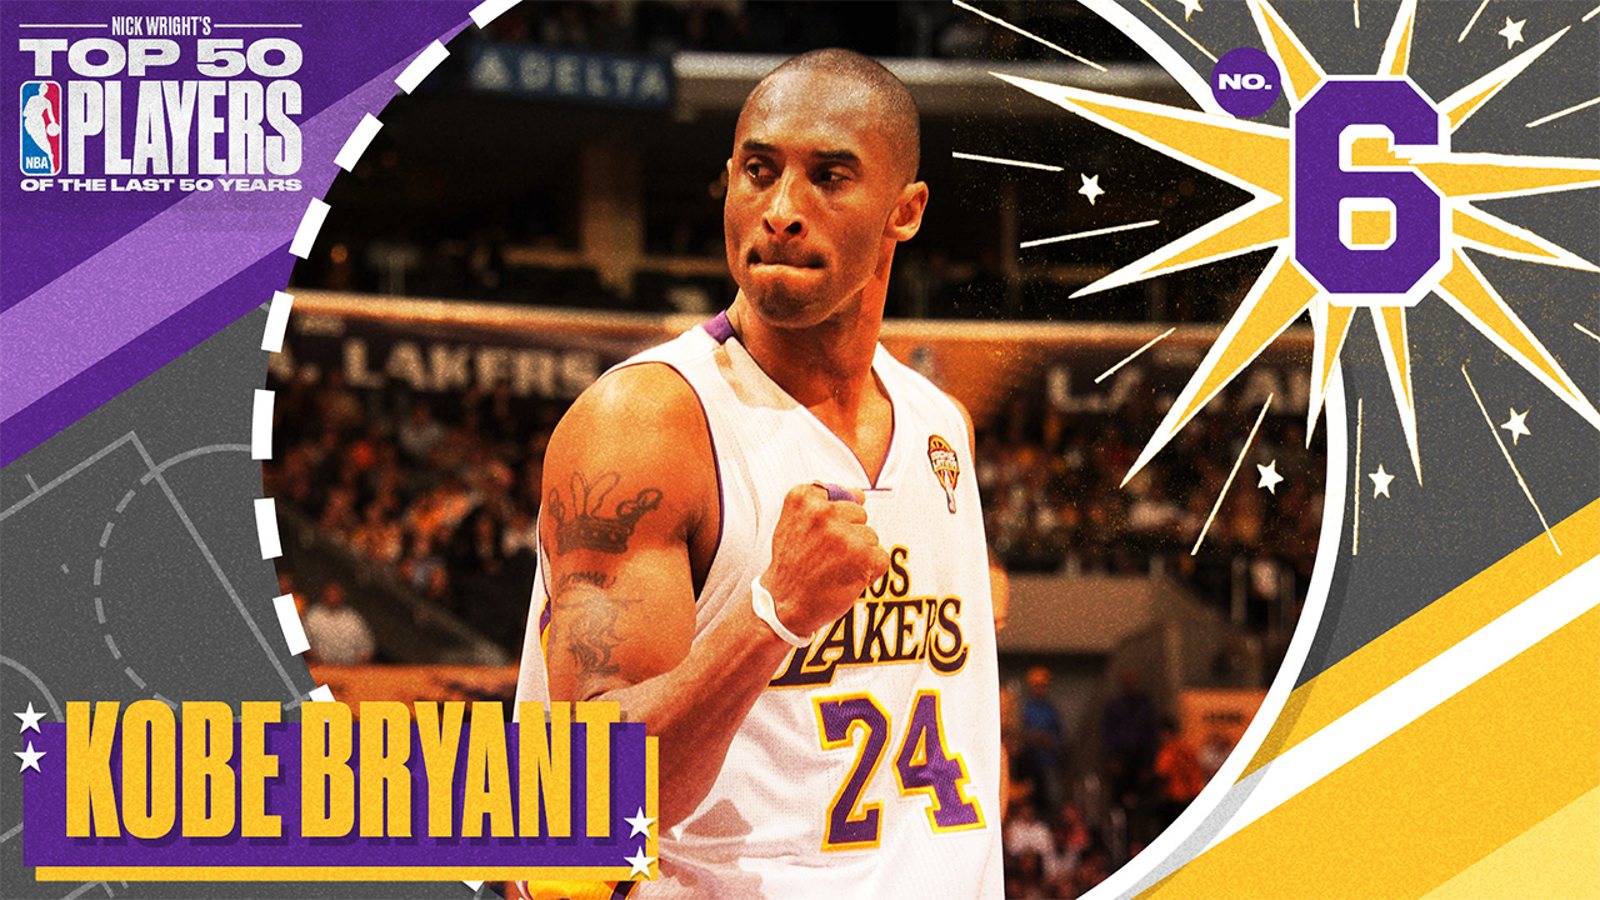 Kobe Bryant | No. 6 | Nick Wright's Top 50 NBA Players of the Last 50 Years